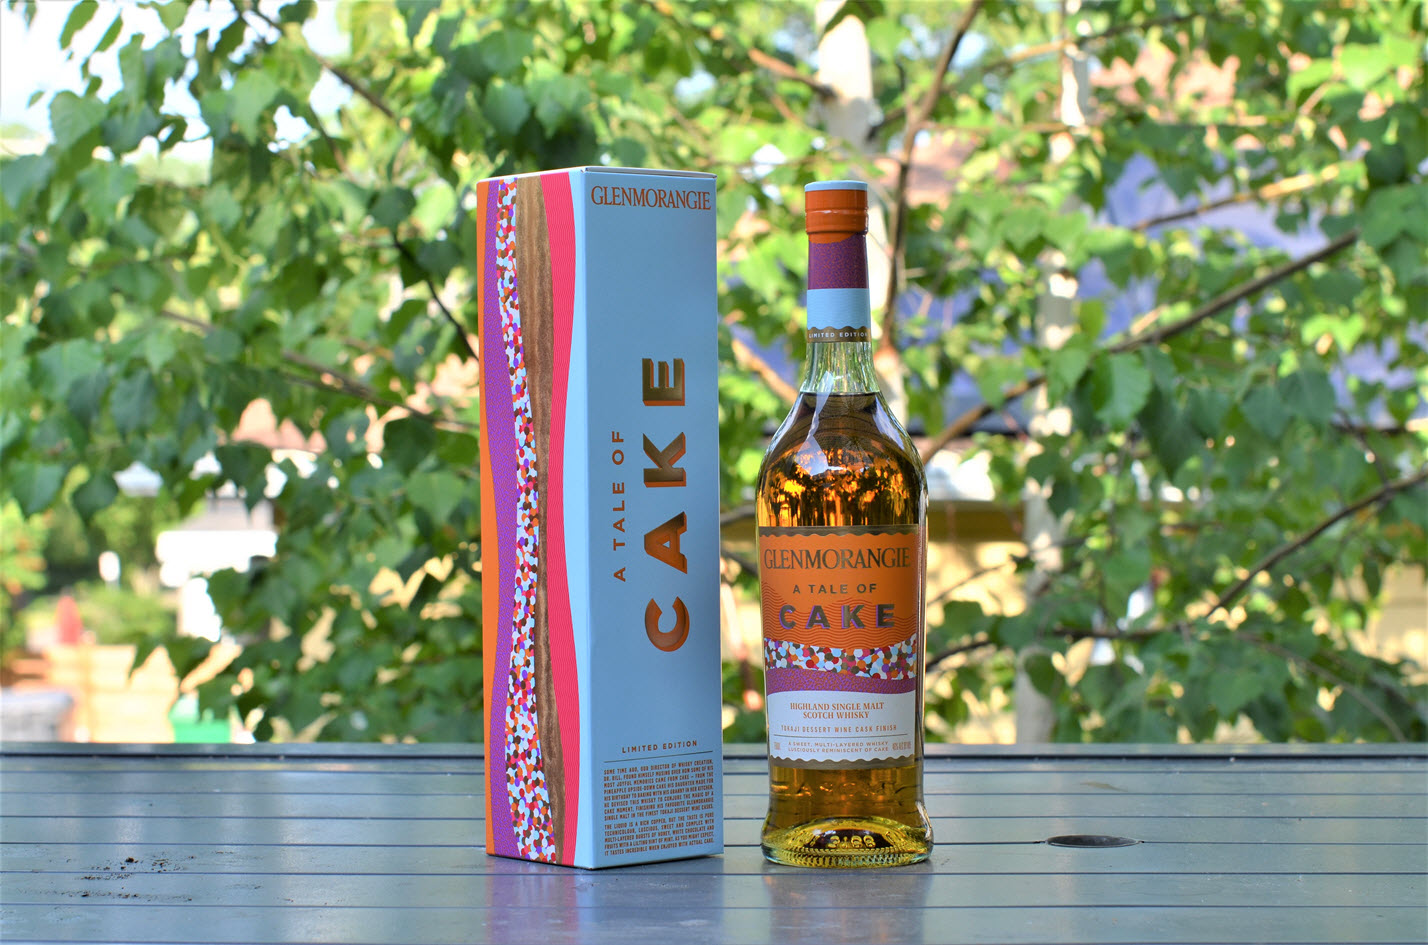 Glenmorangie A Tale of Cake Single Malt Scotch Whisky – Flaviar